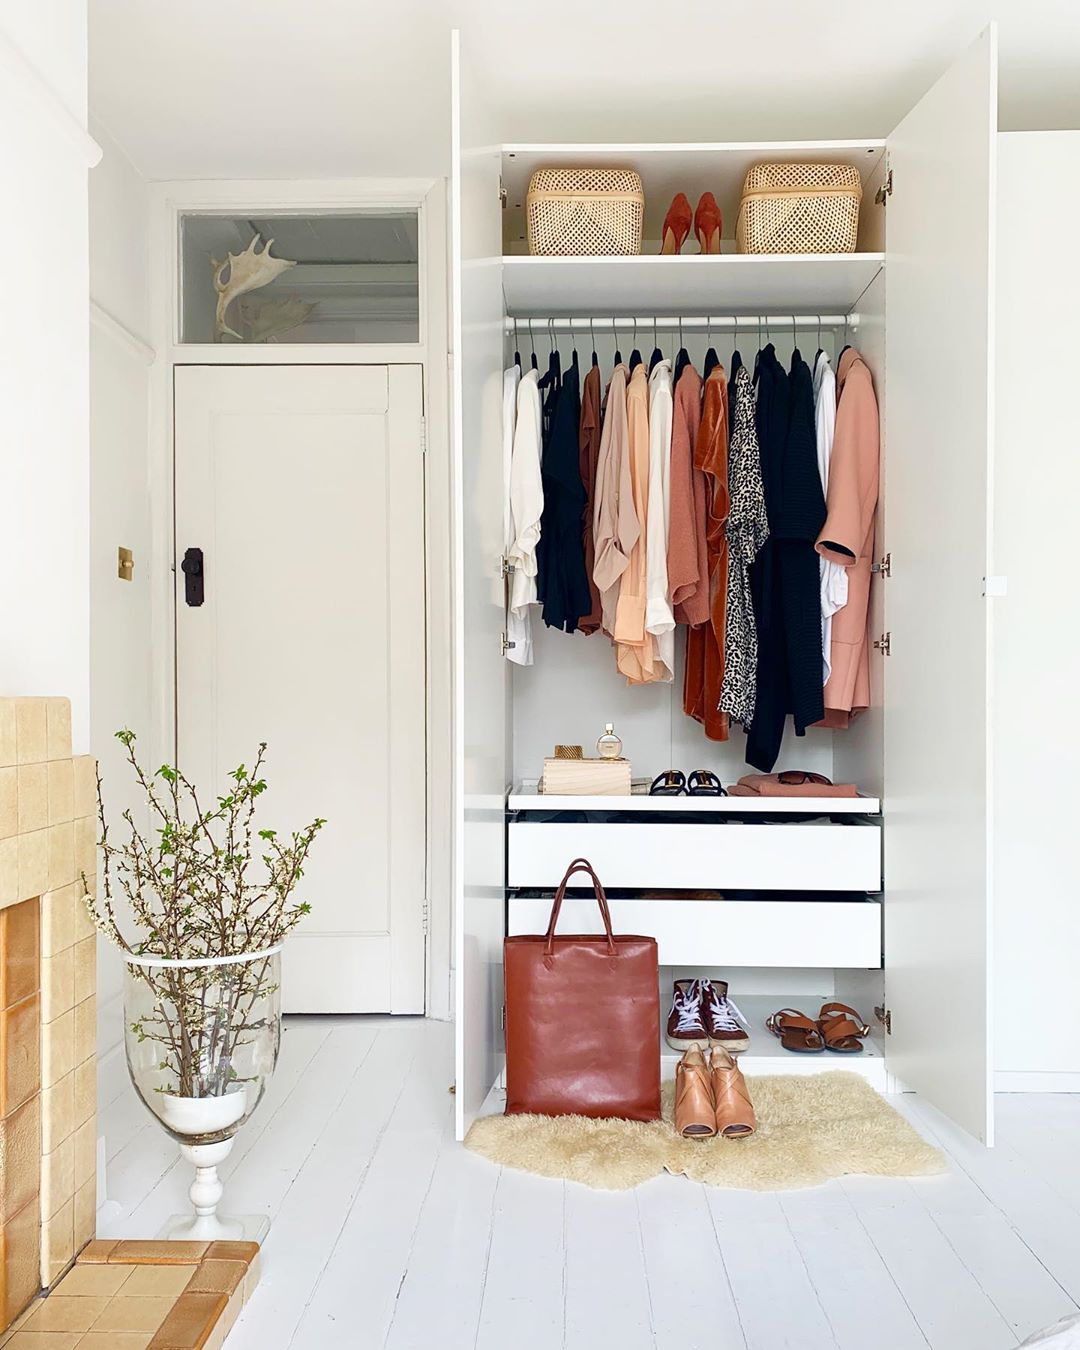 Closet with Dresser Installed Below Clothes. Photo by Instagram user @millatawast